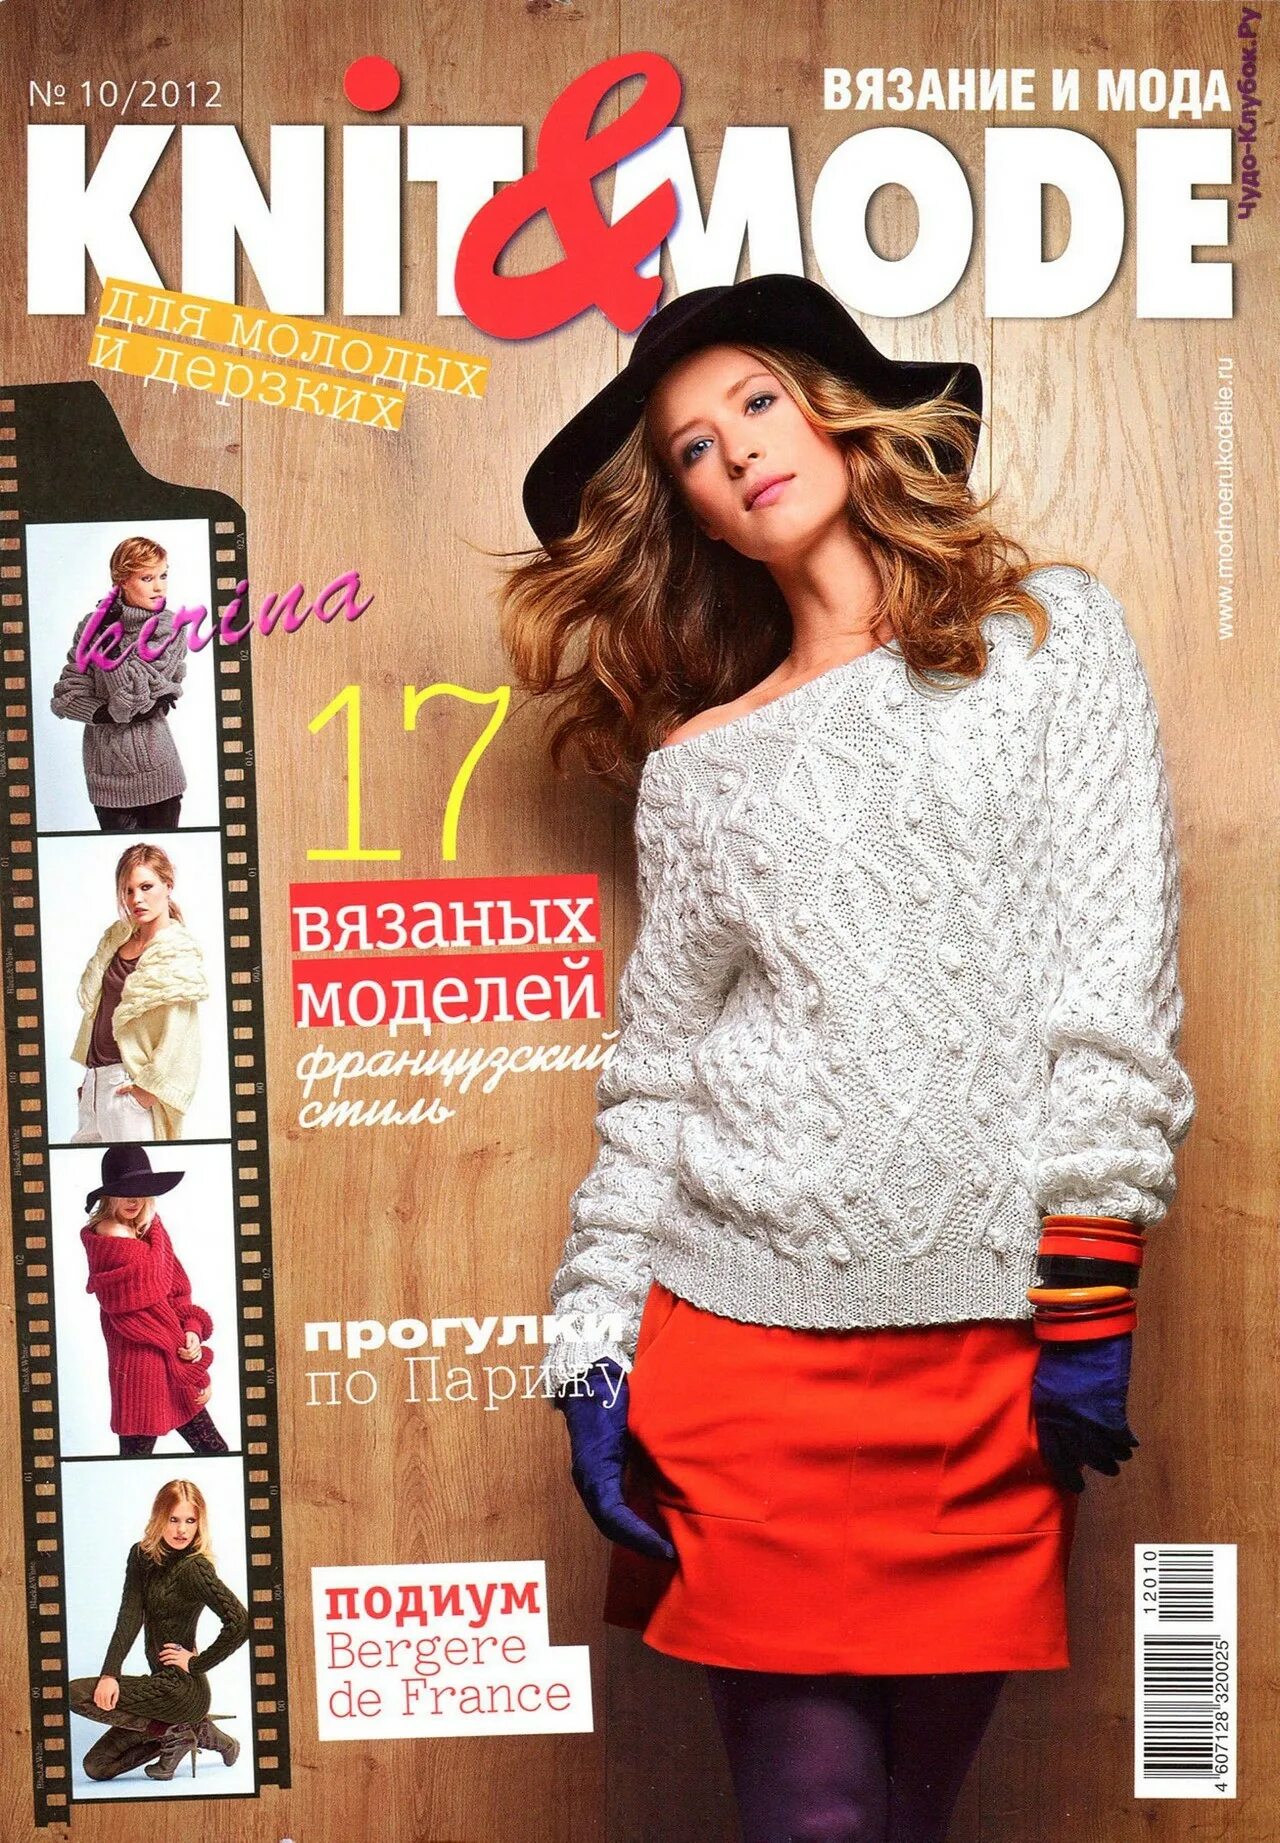 Knit журналы. Журнал вязание и мода Knit Mode. Журнал вязание. Журнал мод по вязанию. Книт мод вязание.